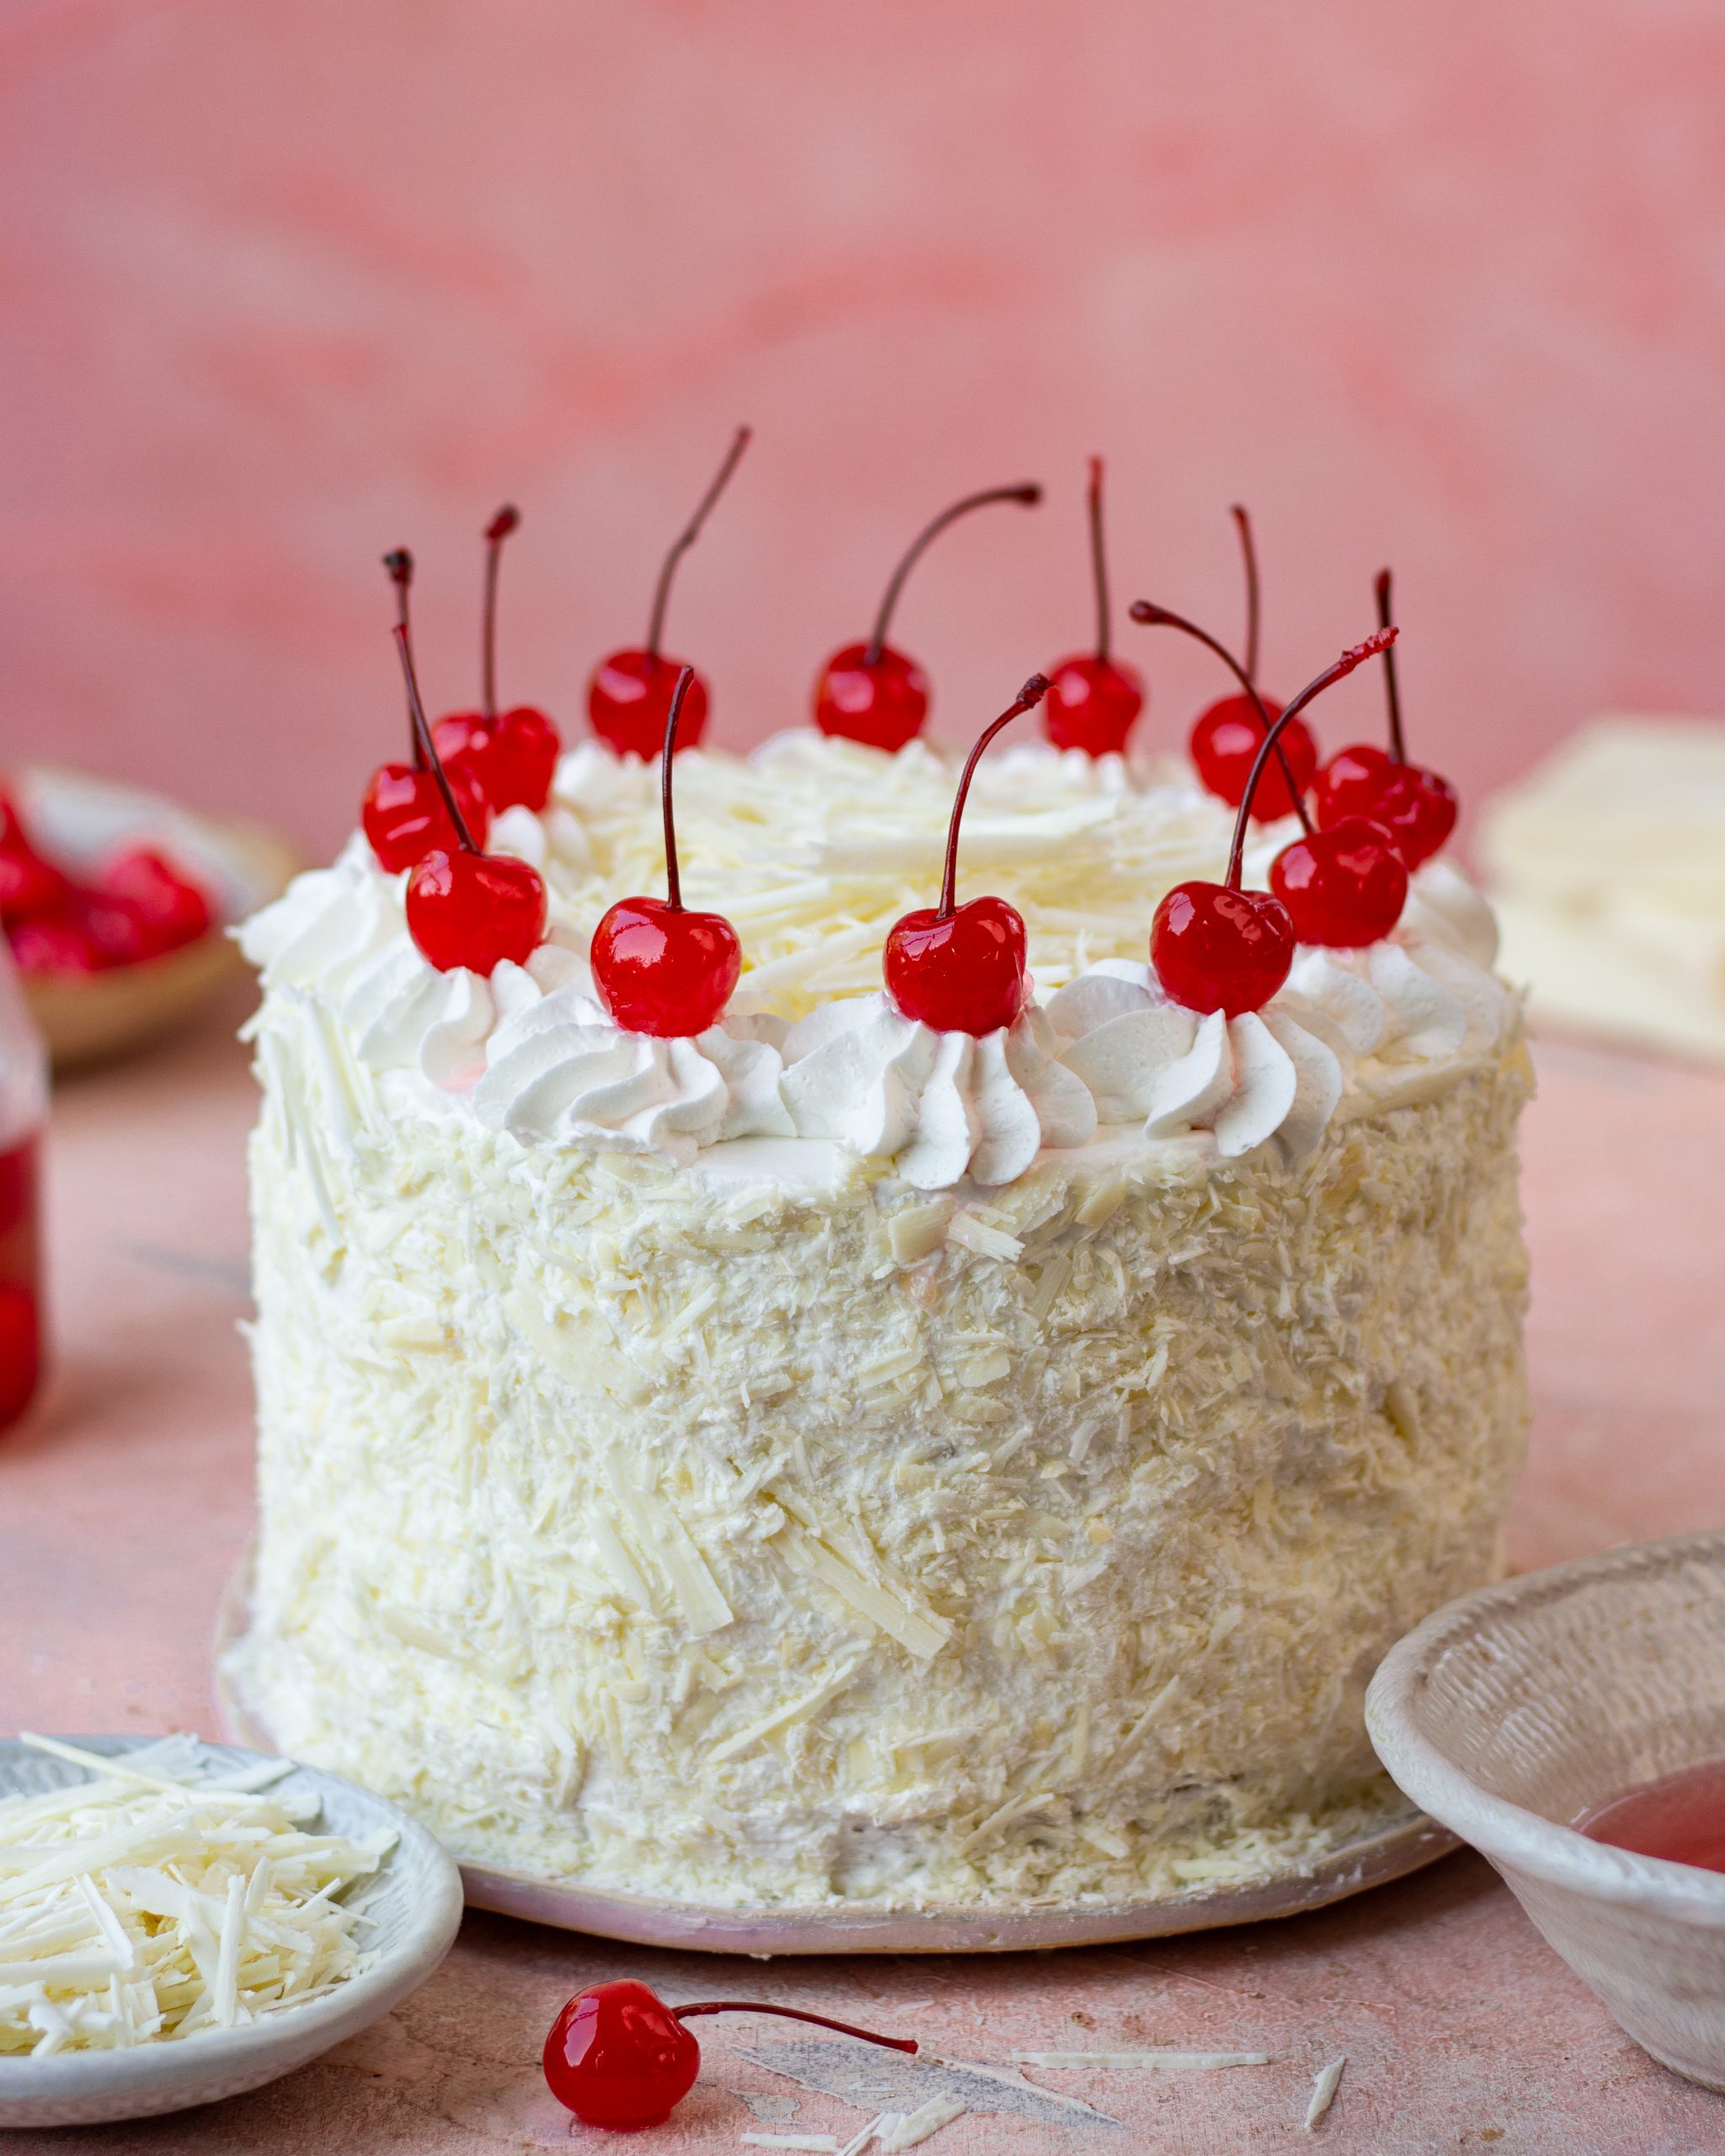 Vanilla Sponge Cake Recipe | Sponge Cake Malayalam | Vanilla Cake Recipe  Malayalam | Tea Cake Recipe - YouTube